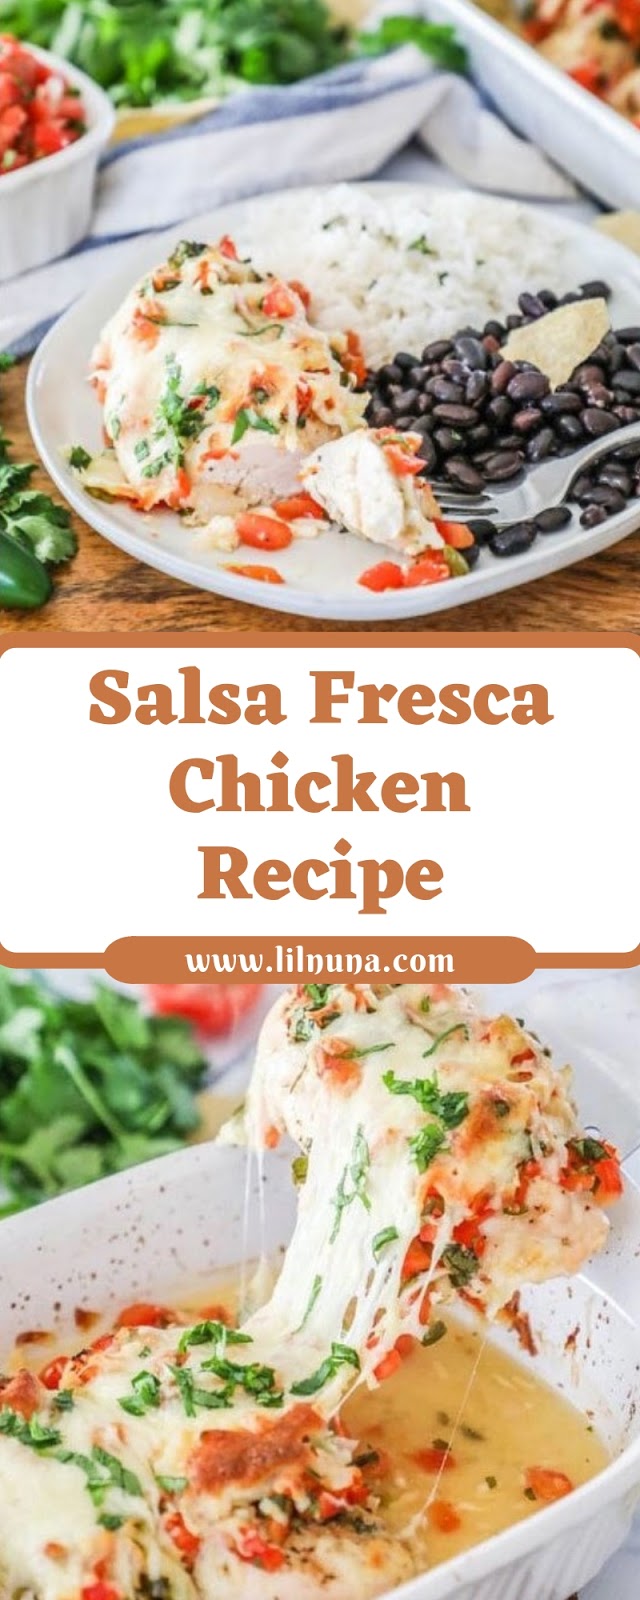 Salsa Fresca Chicken Recipe